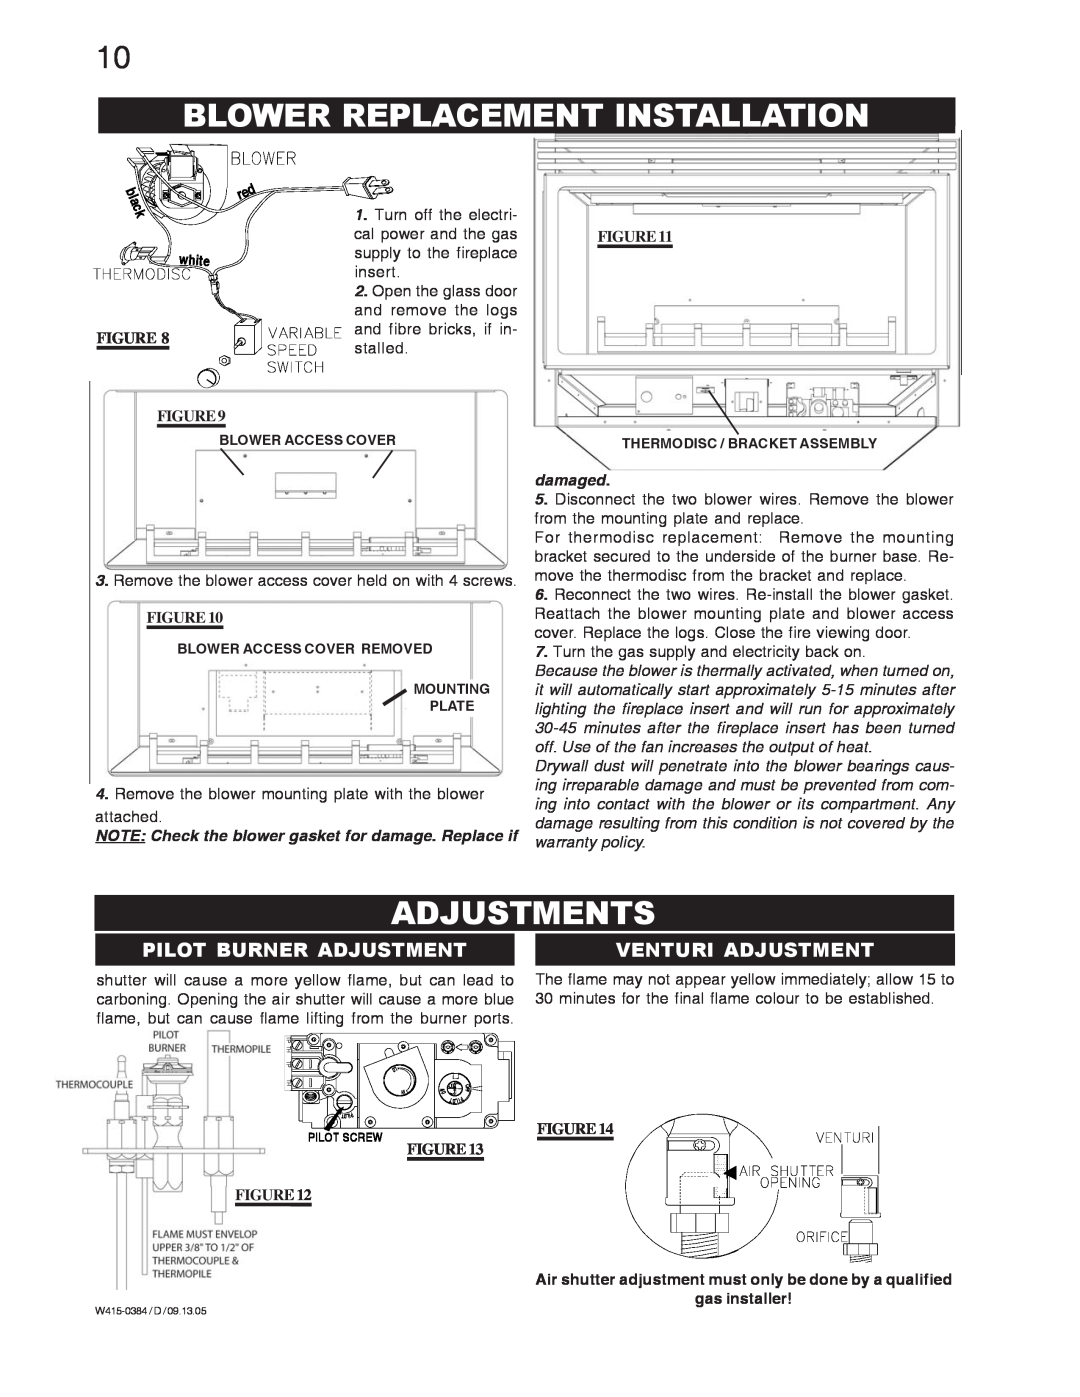 Napoleon Fireplaces GDI-30P Blower Replacement Installation, Adjustments, Pilot Burner Adjustment, Venturi Adjustment 